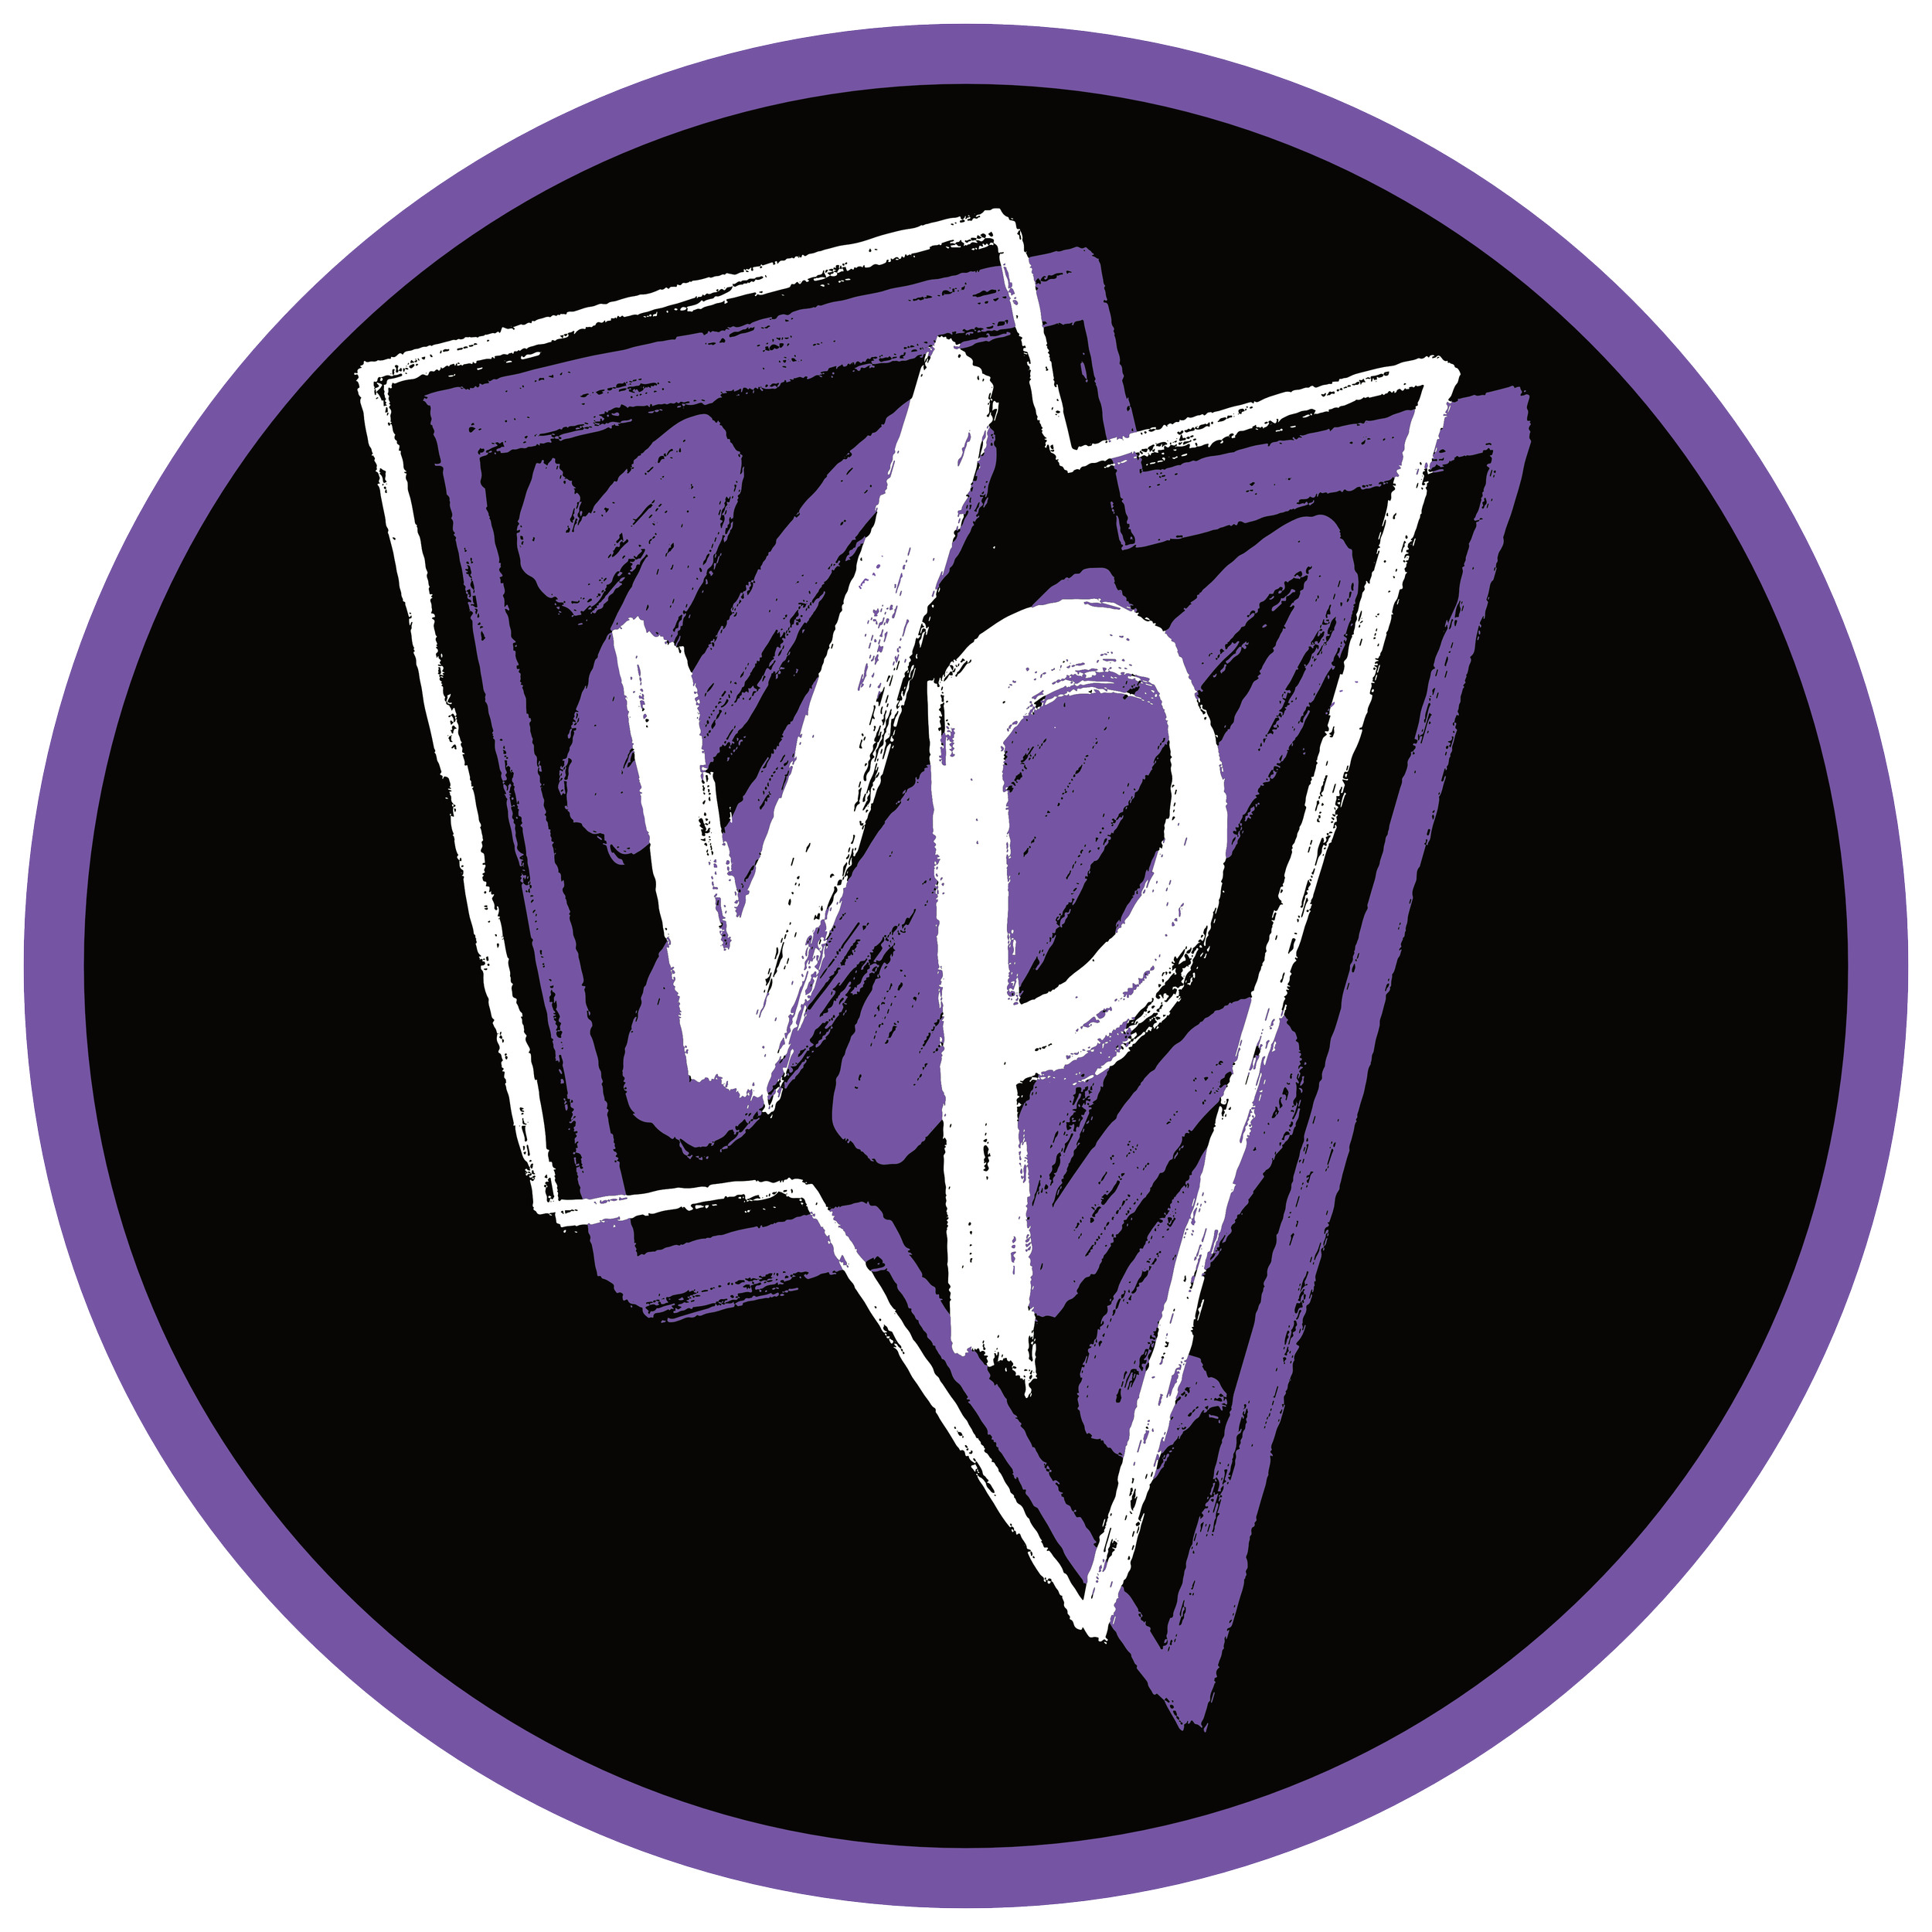 Vipop Productions